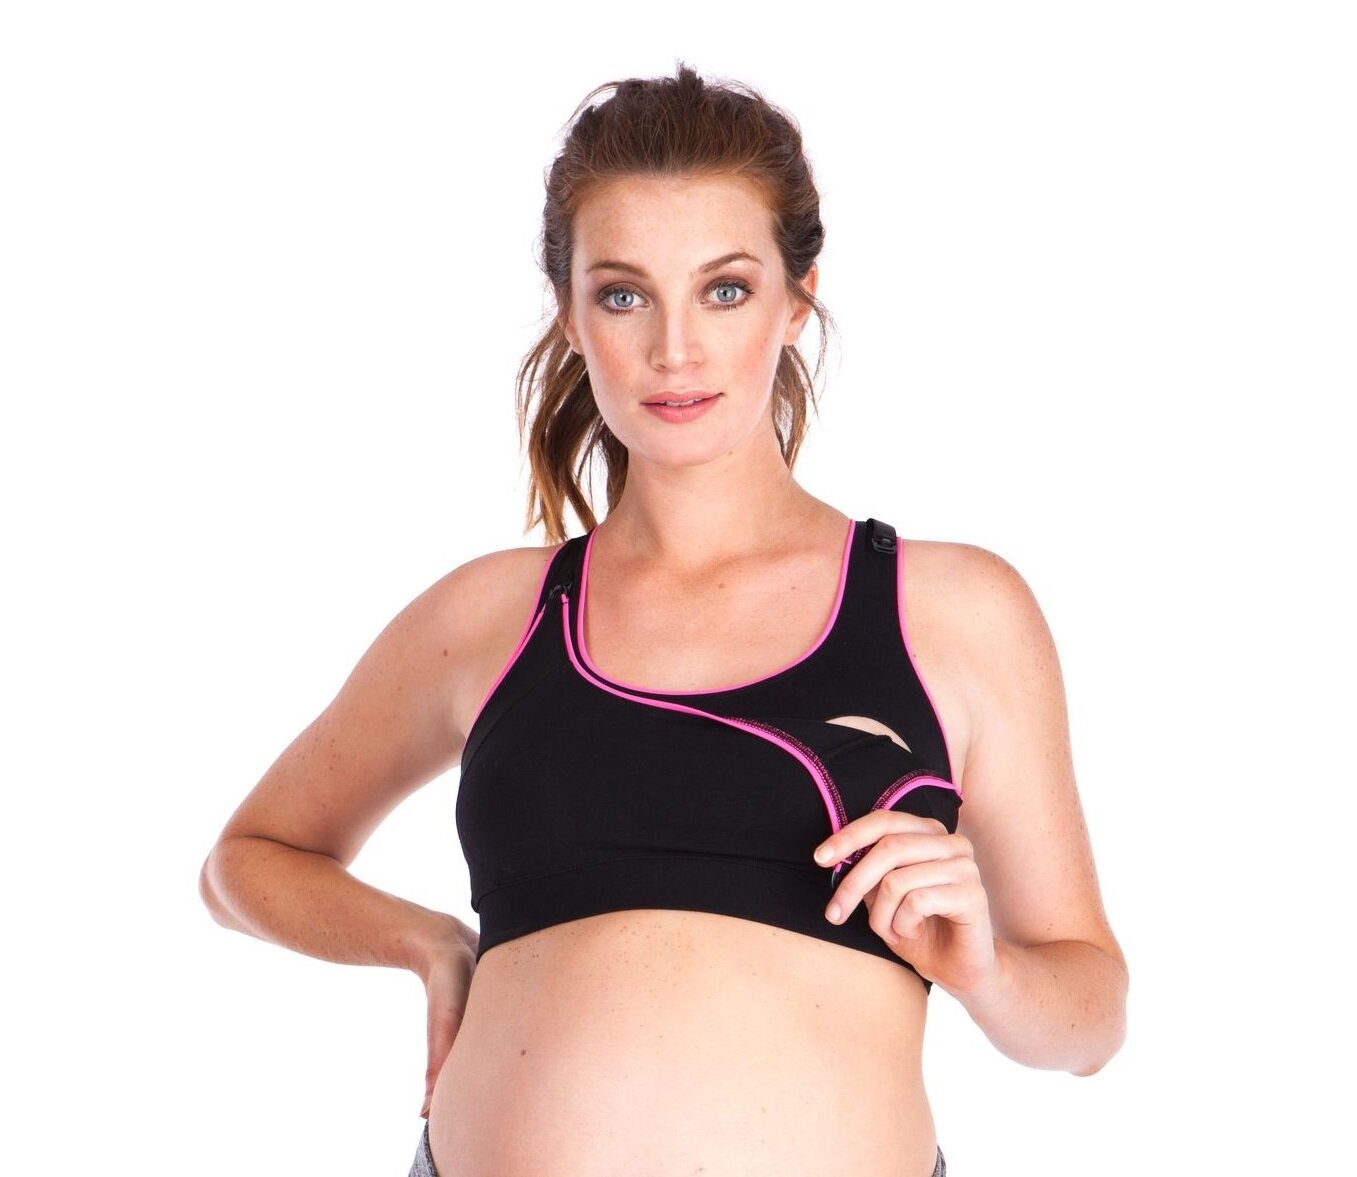 Best Sports bra for pregnancy?